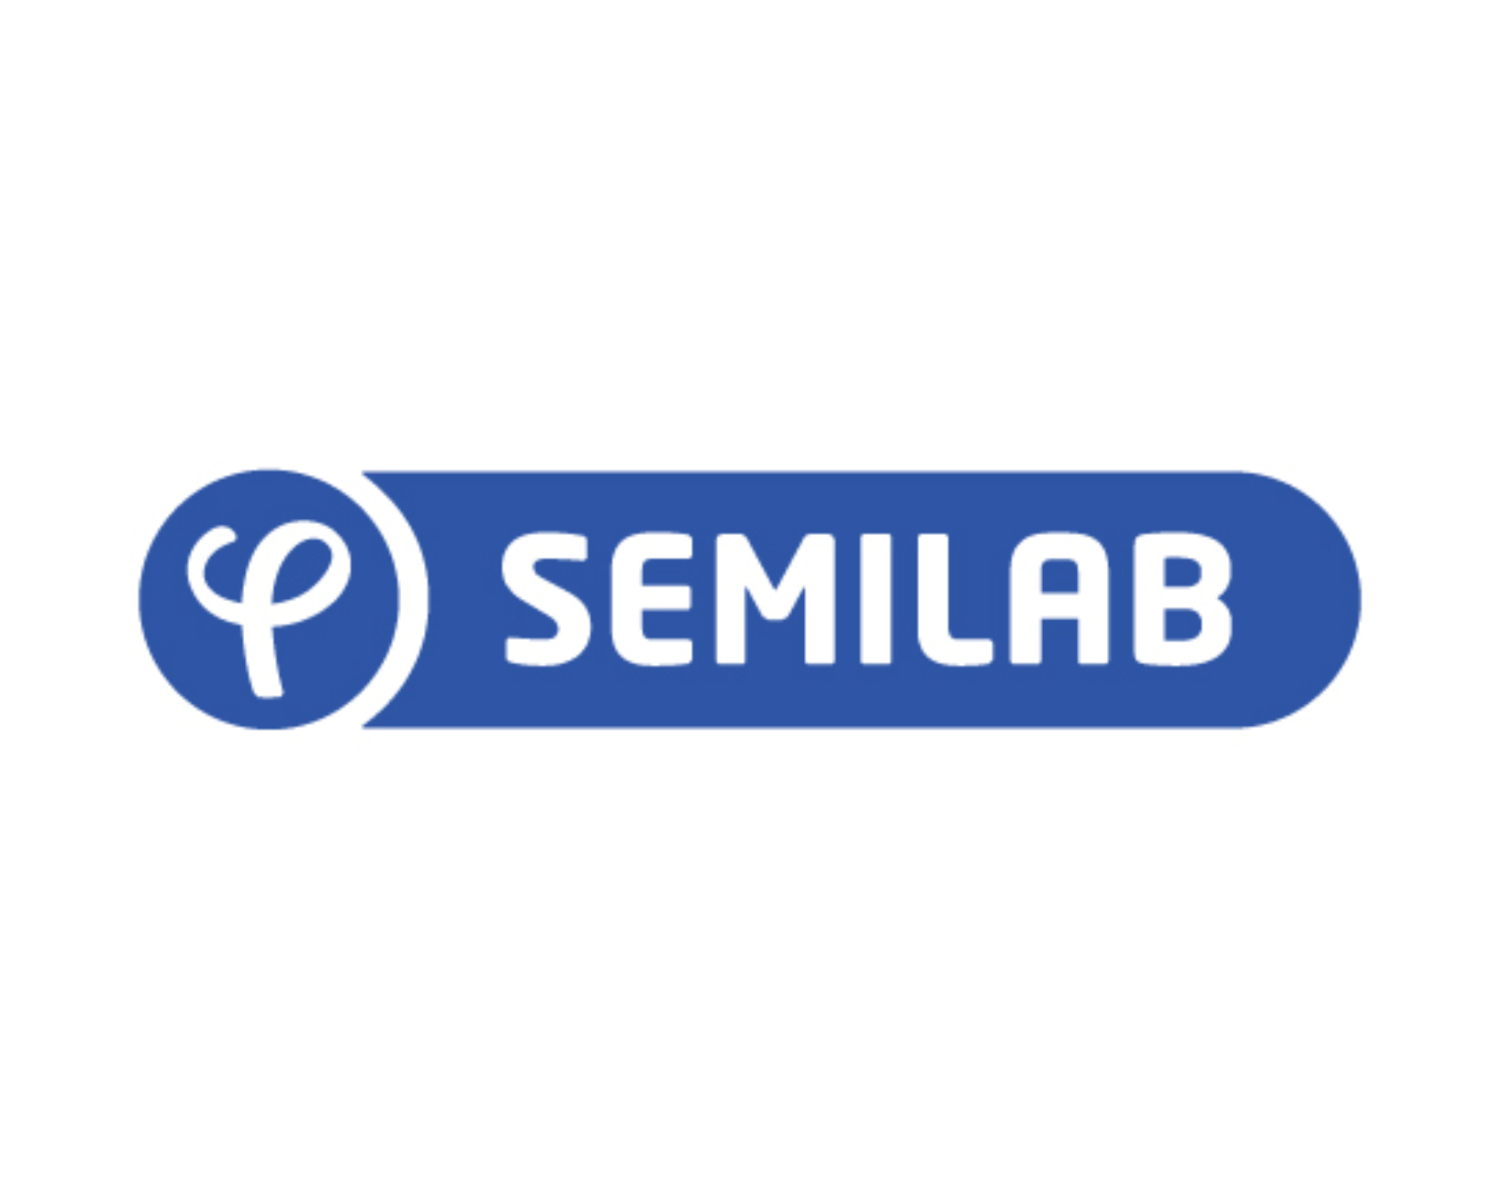 Semilab